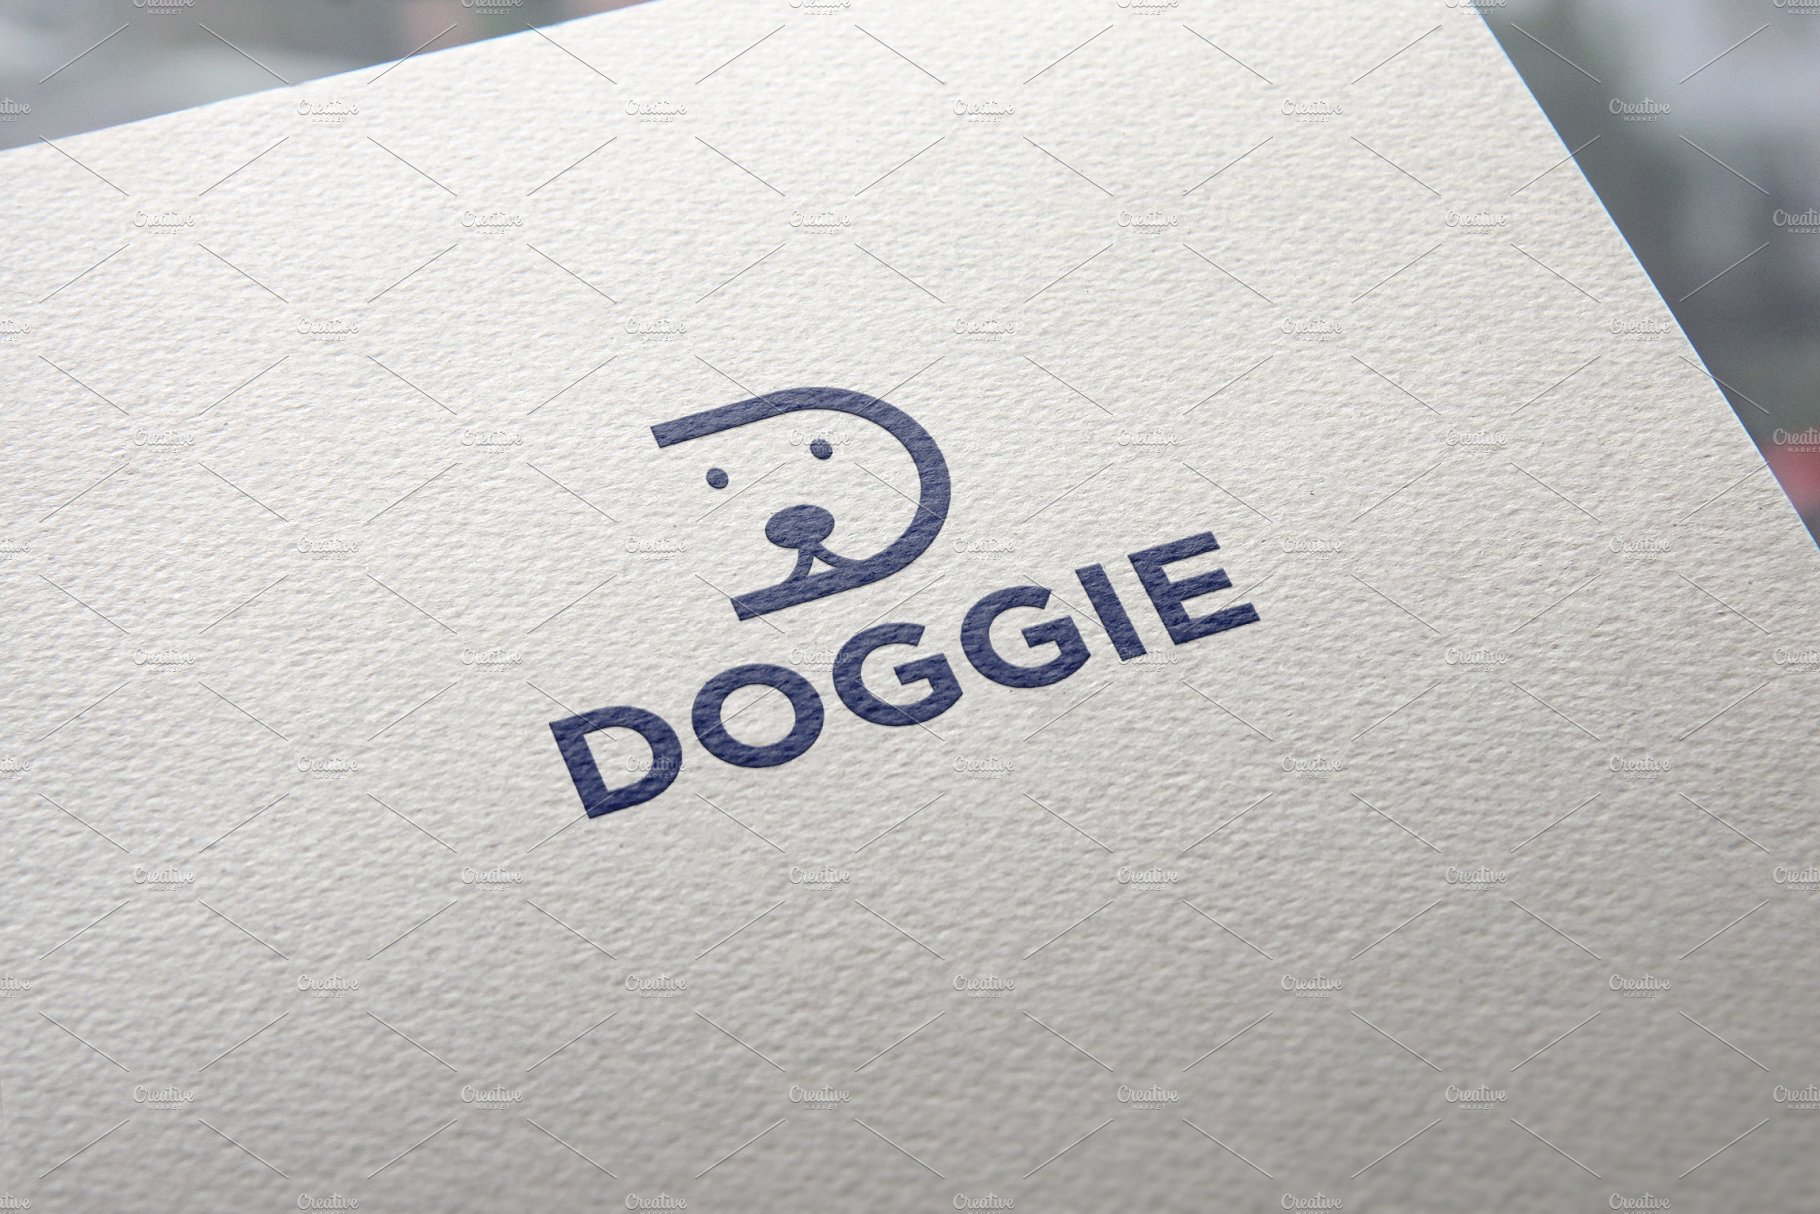 Doggie Logo cover image.